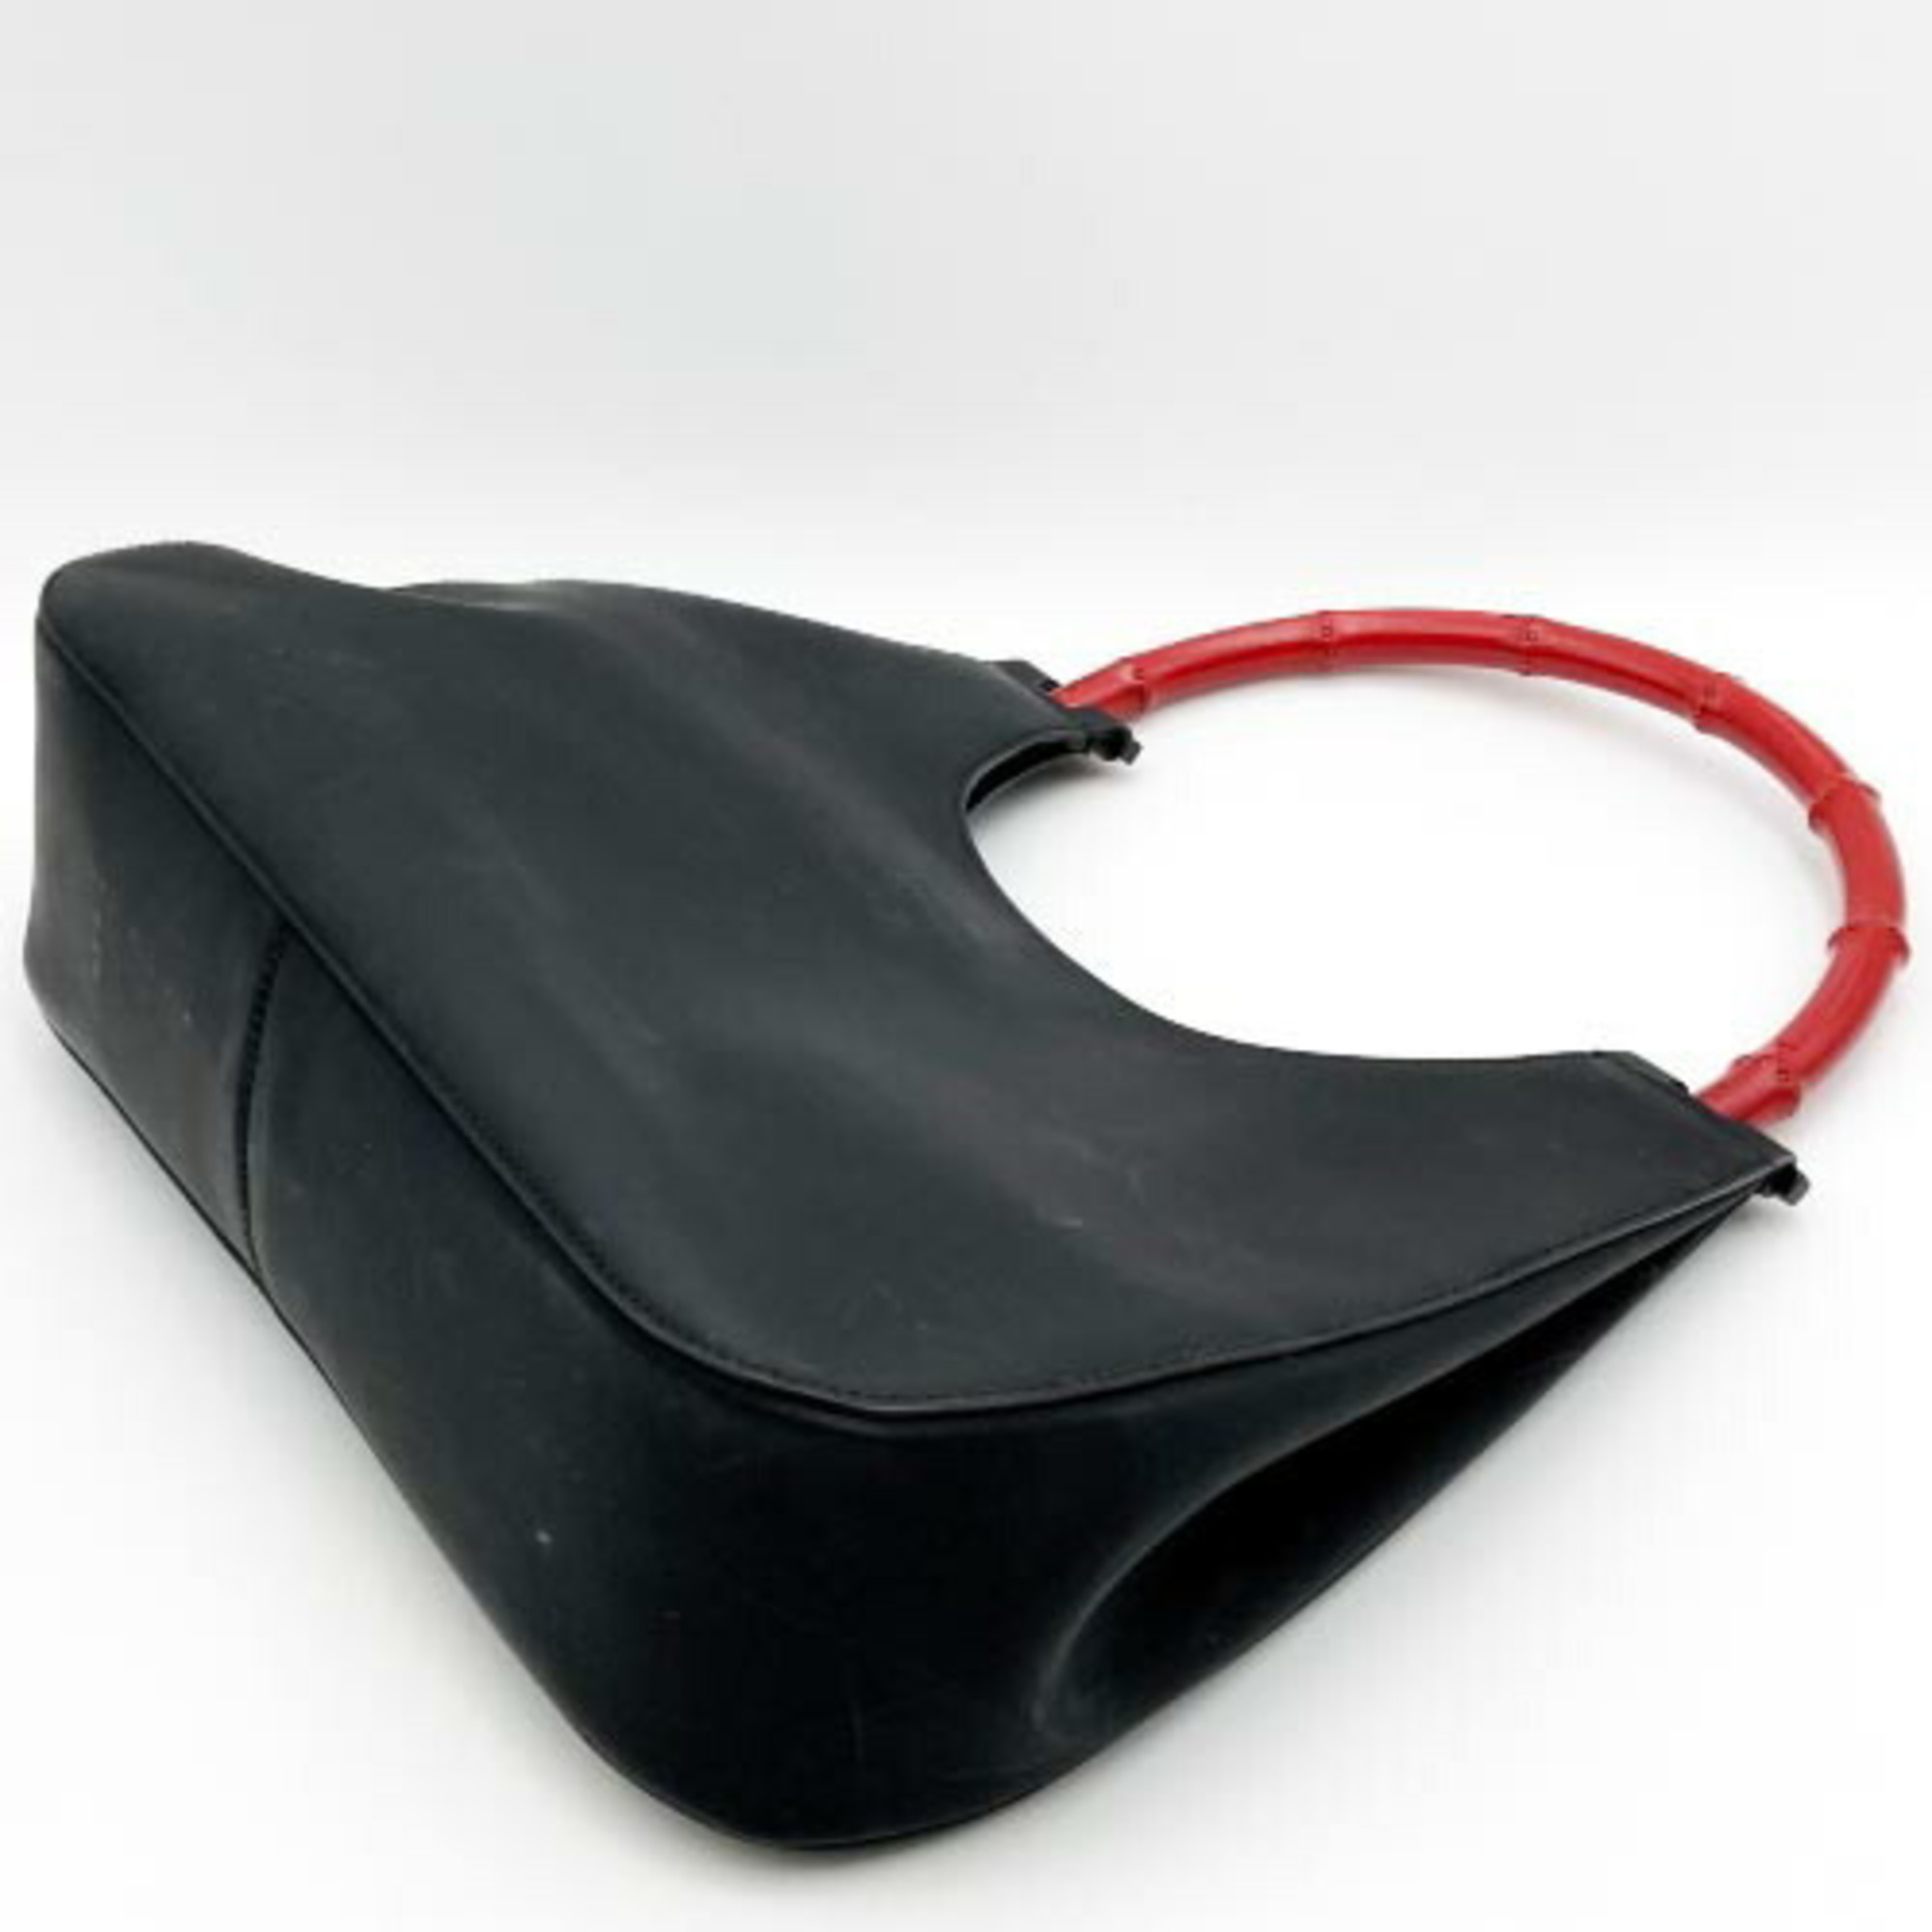 GUCCI Gucci Bamboo Shoulder Bag Handbag Hobo Black Red Leather Ladies Fashion 001 3739 USED IT2RWJLKQ3UW